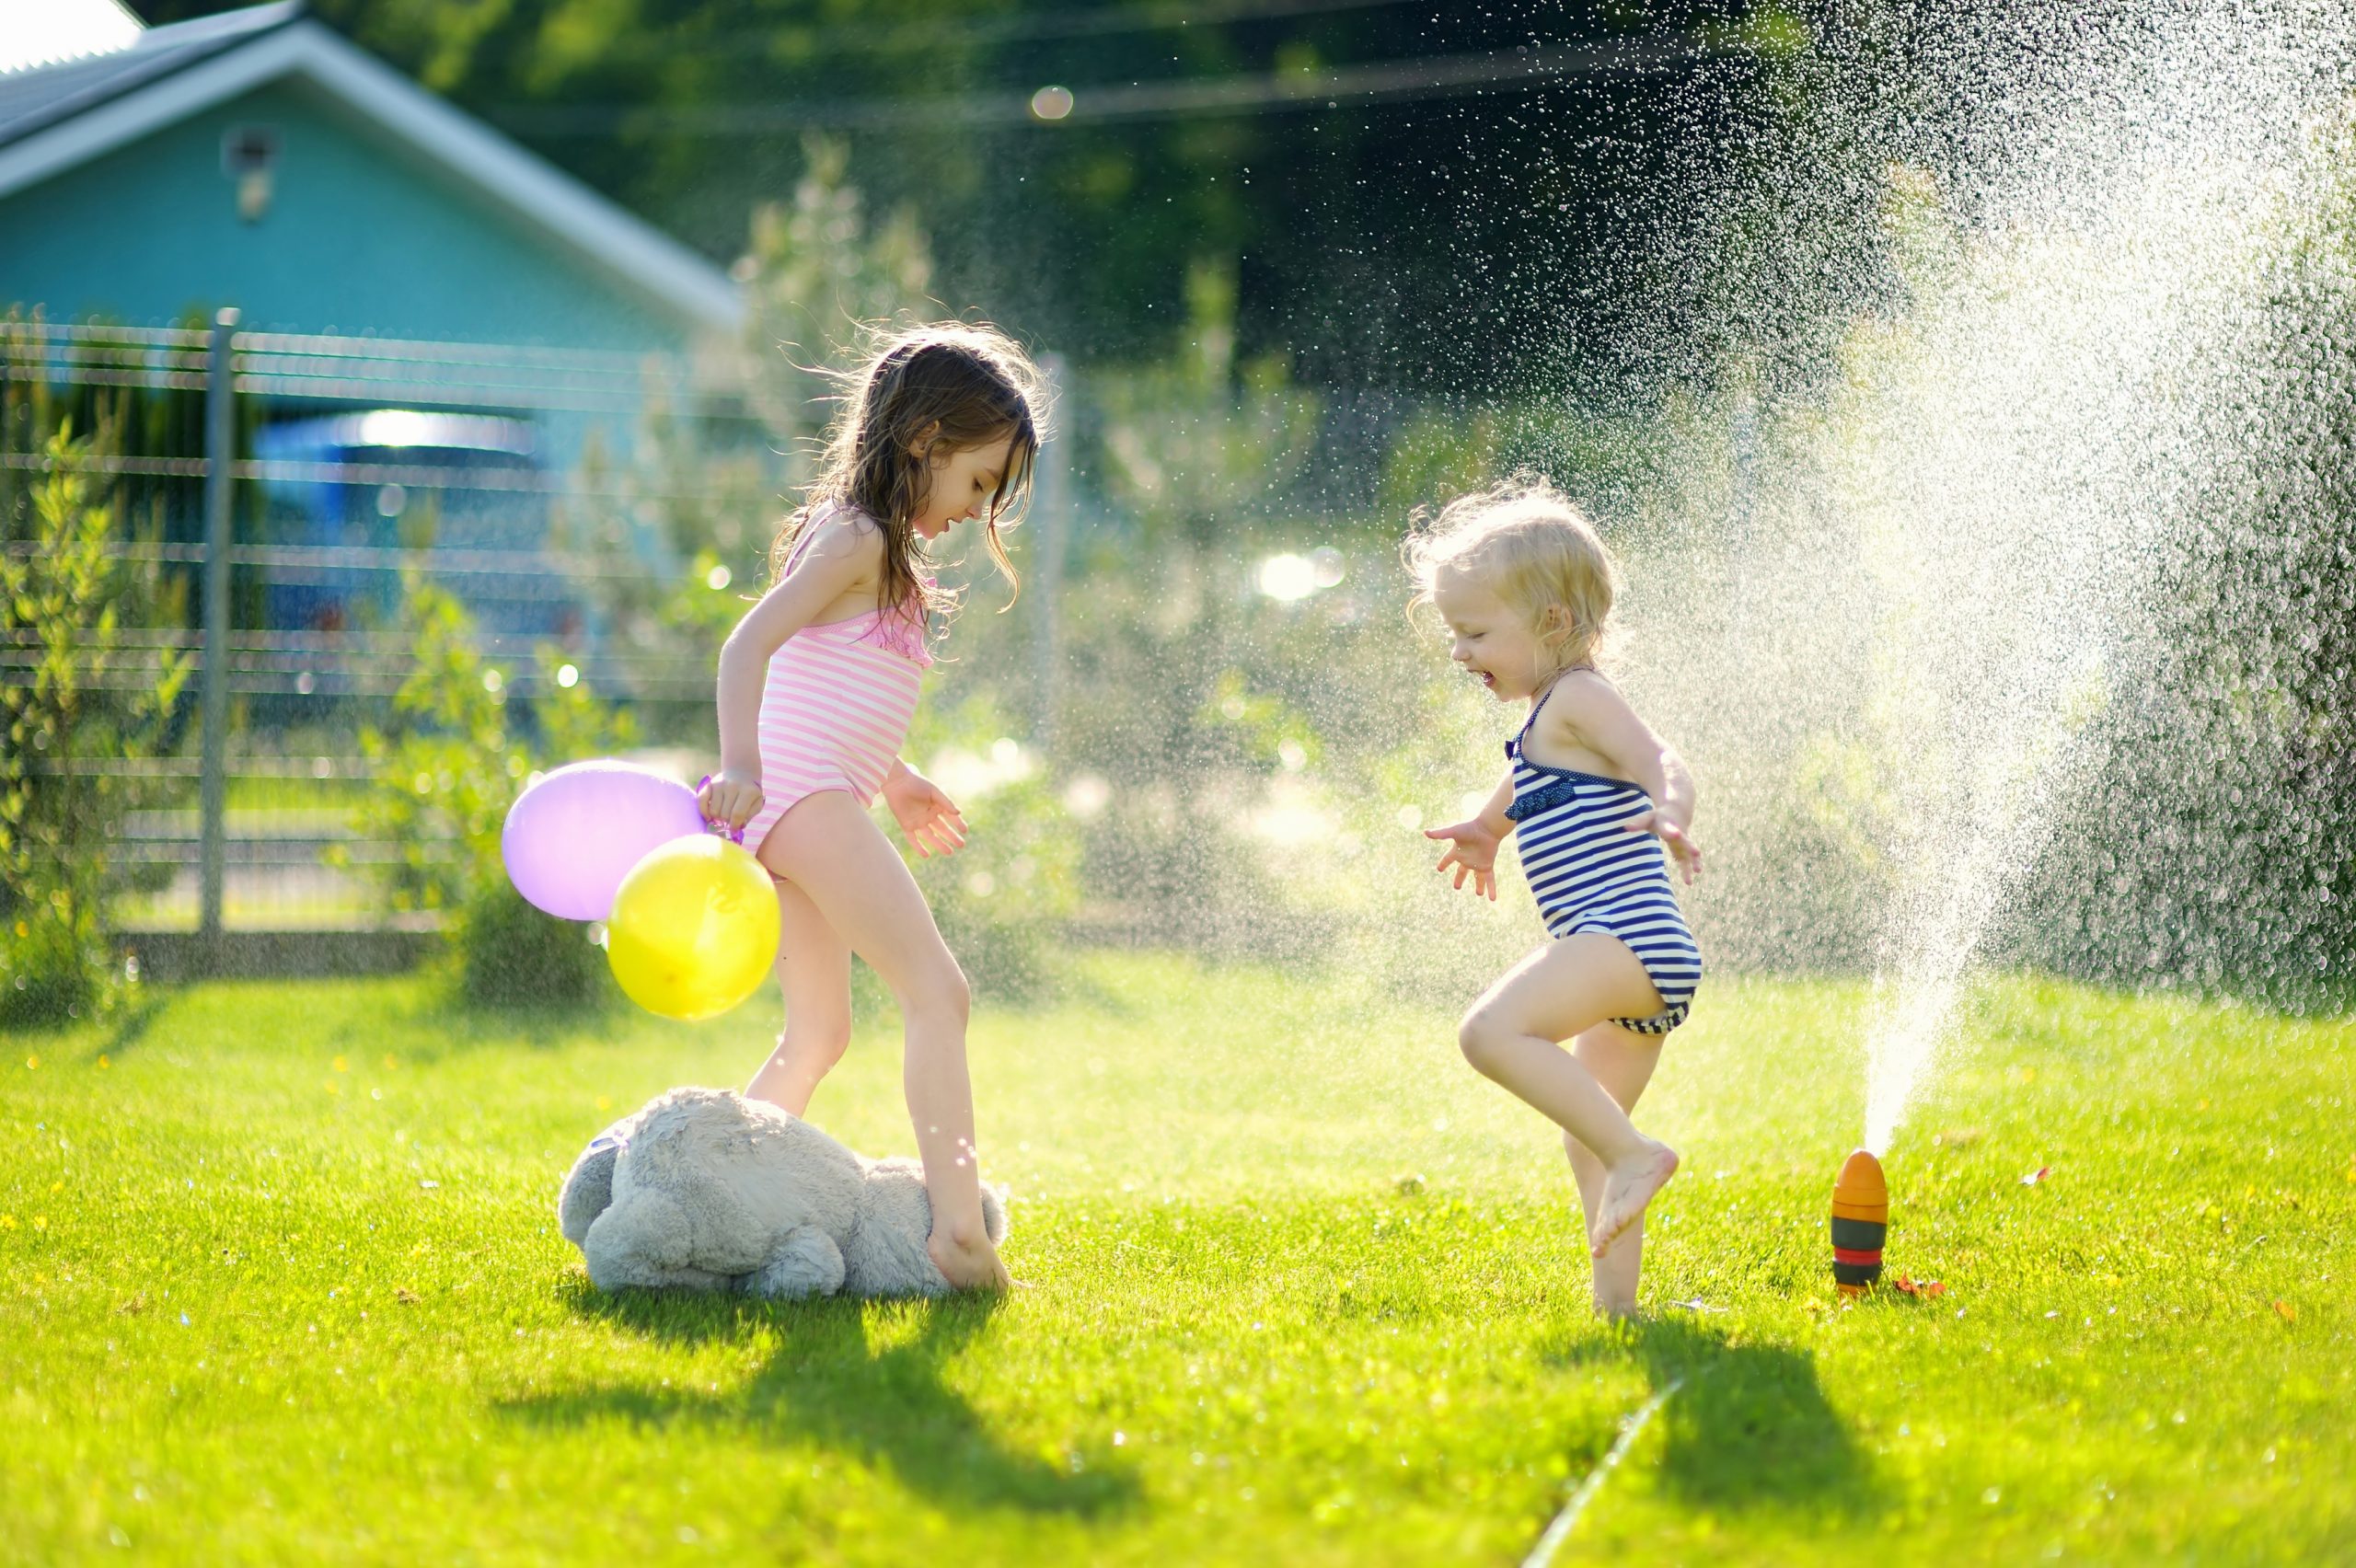 Little girls running though a sprinkler in a backyard